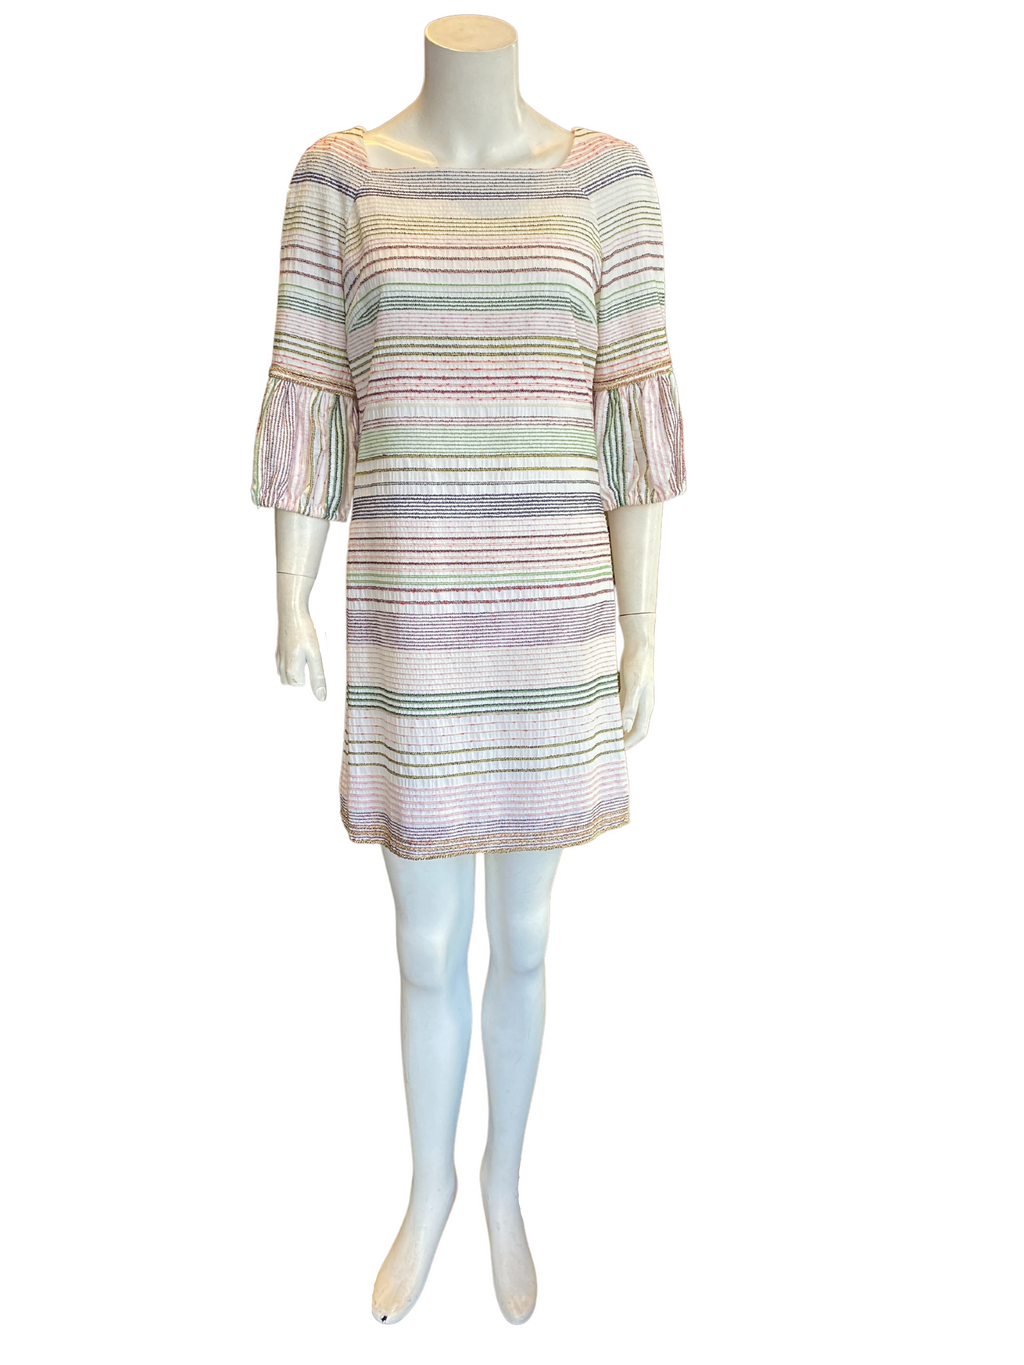 Chanel Spring ‘07 Cotton & Wool Shift Dress |M|FR38|US6